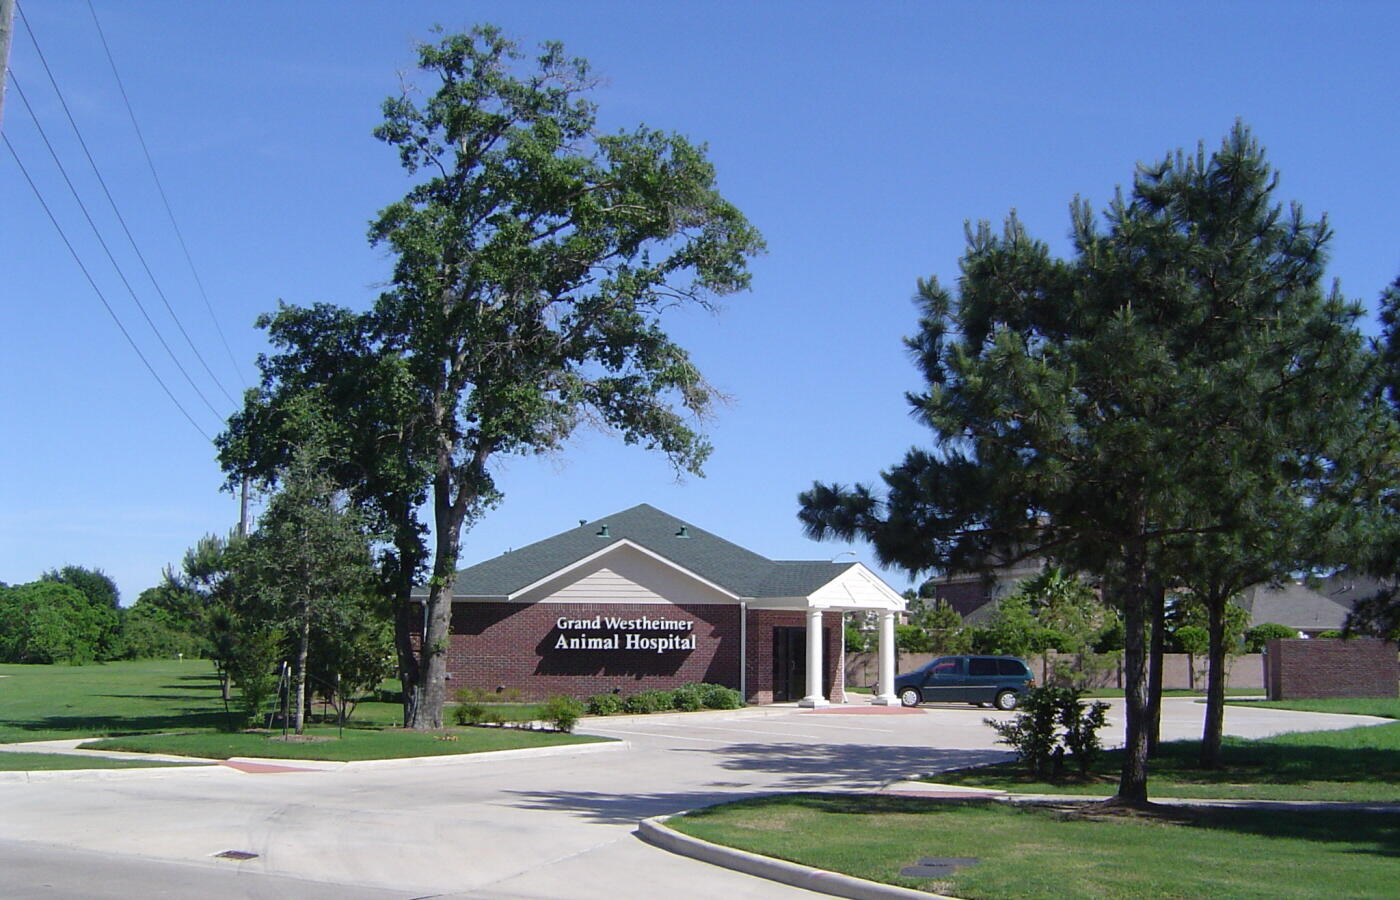 Grand Westheimer Animal Hospital - Katy, TX - Nextdoor